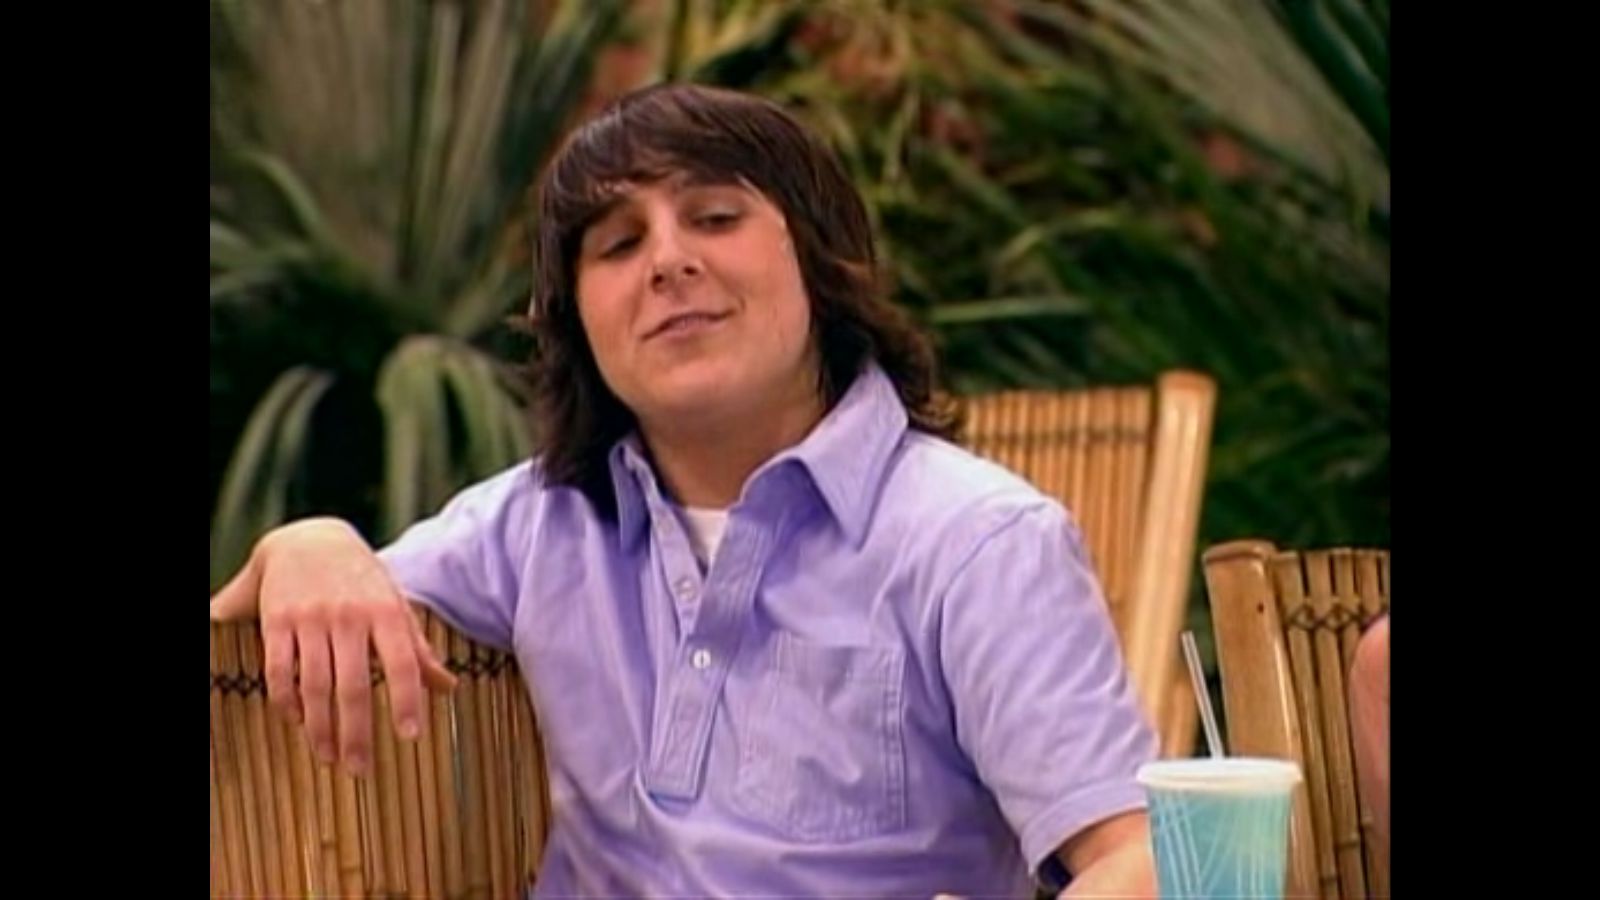 Mitchel Musso in Hannah Montana (Season 2)